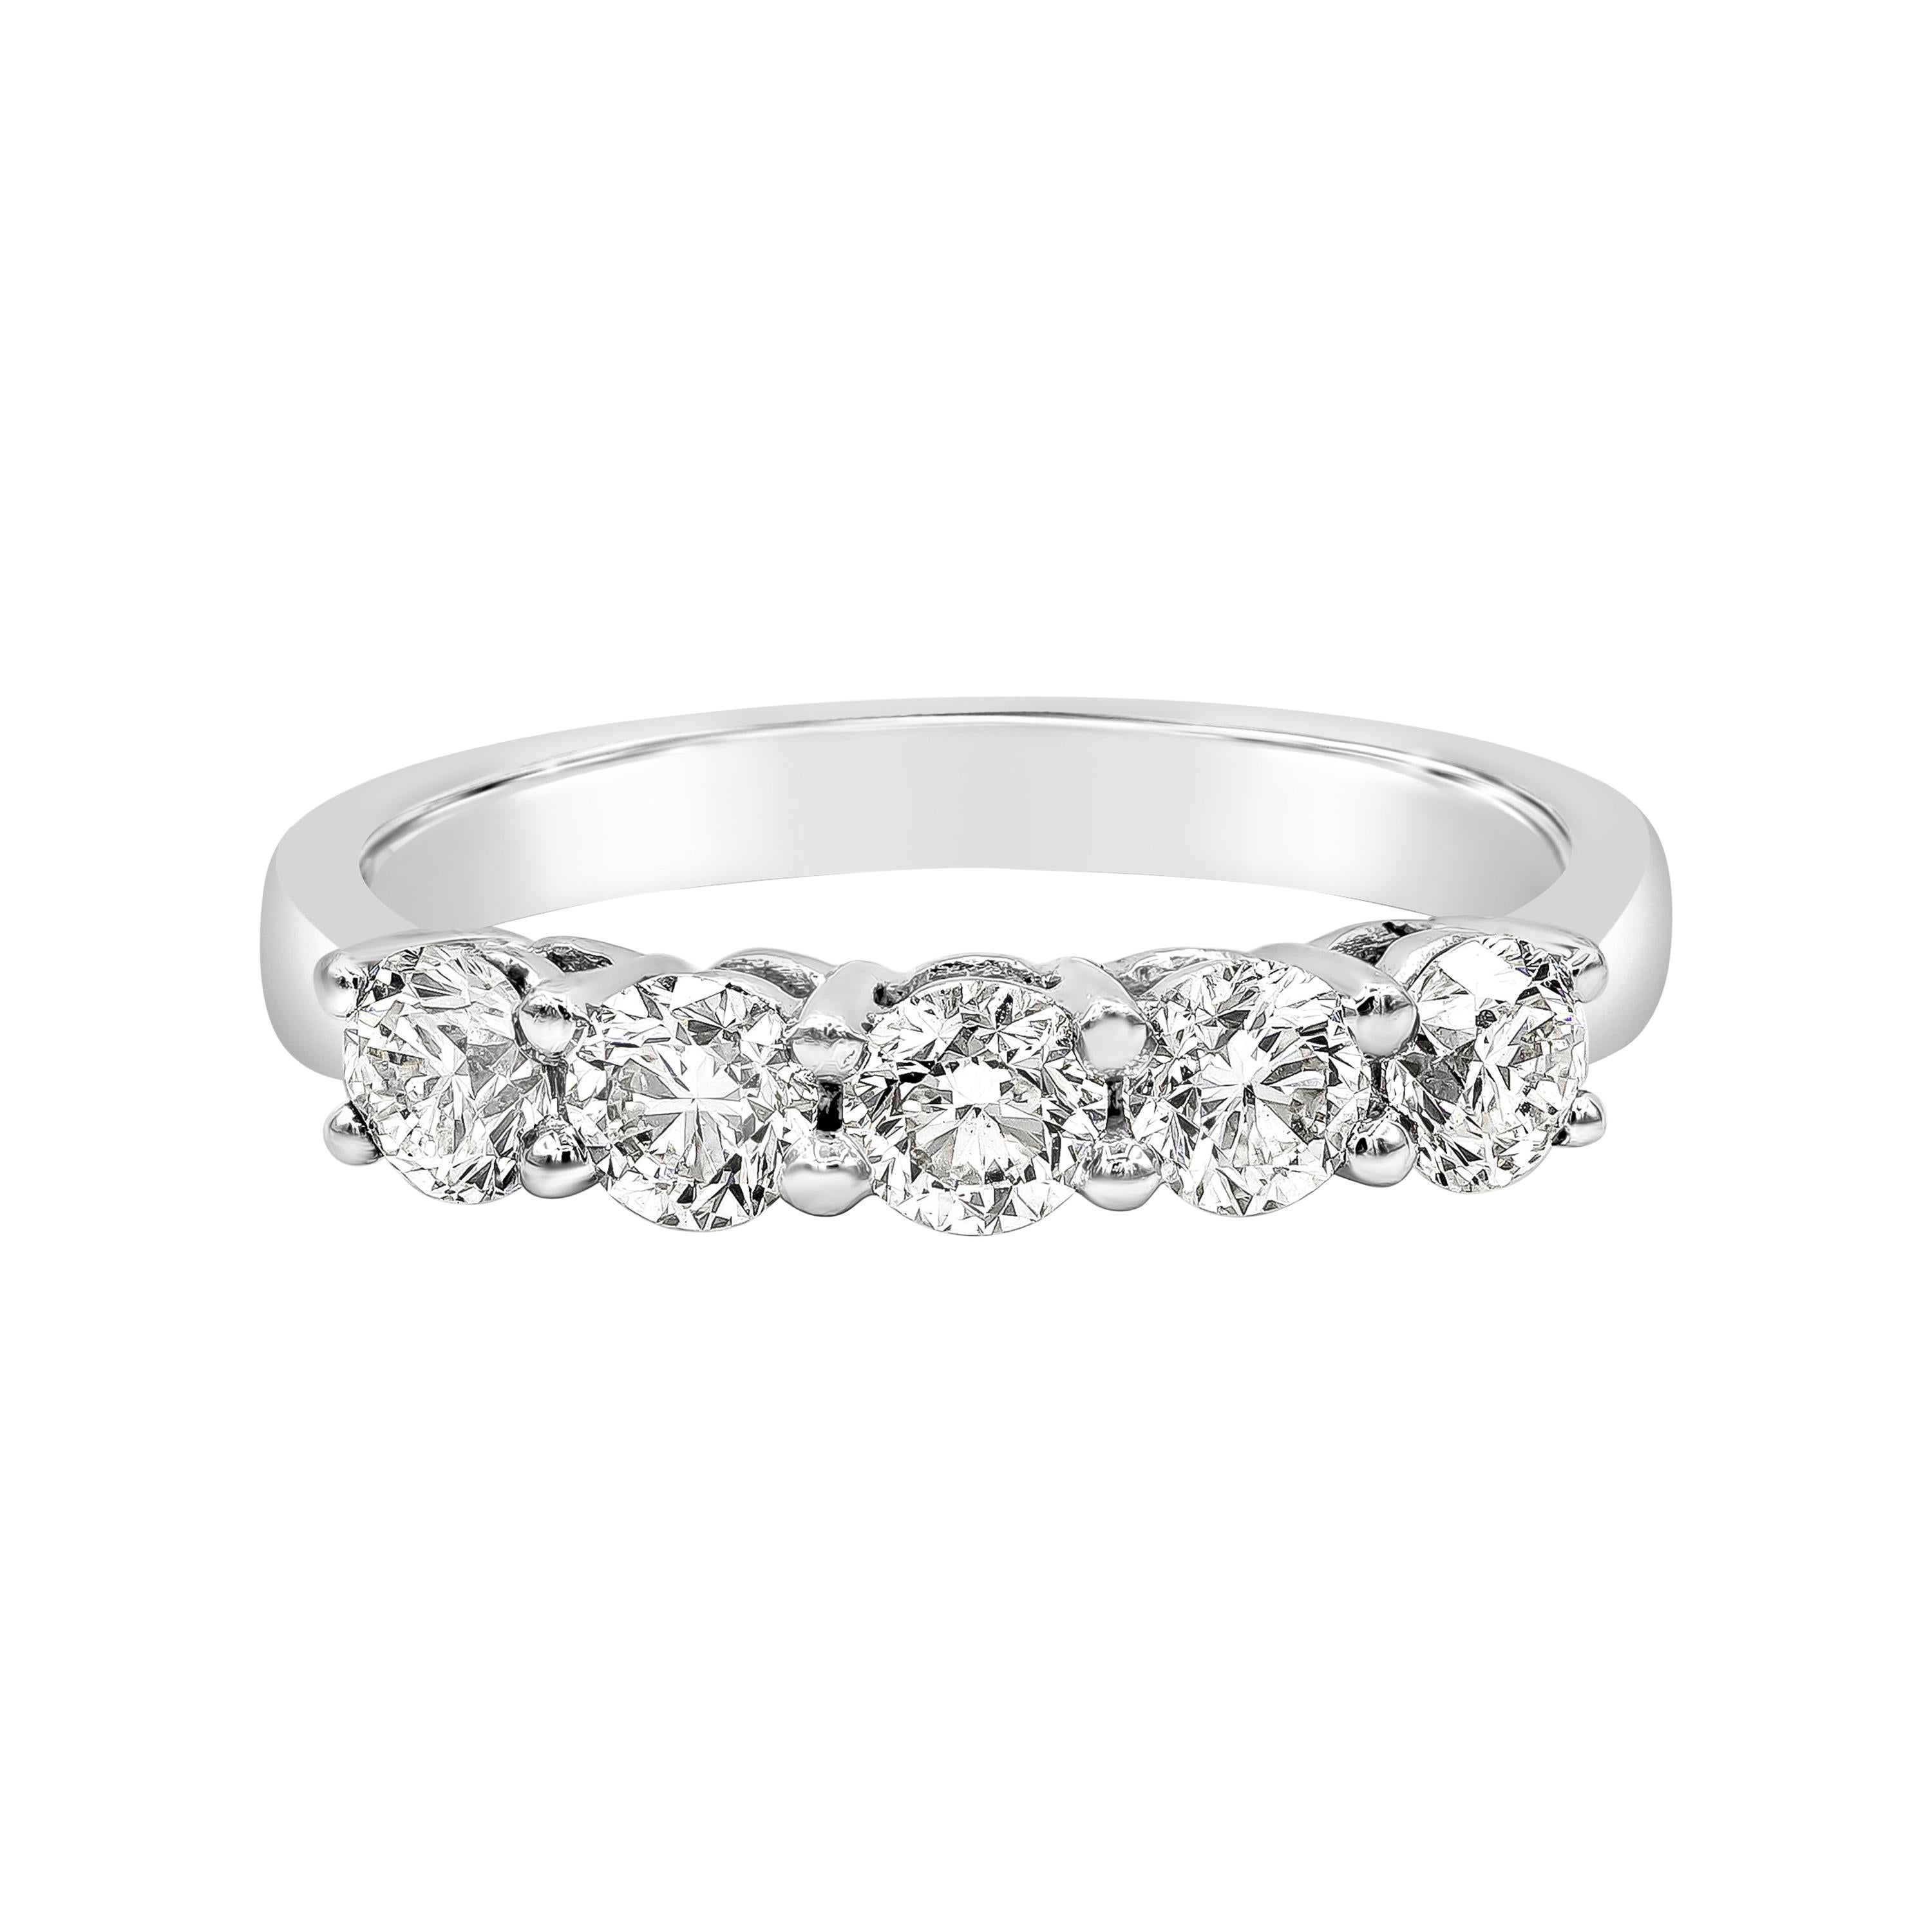 Roman Malakov 1.21 Carats Total Round Diamond Five-Stone Wedding Band Ring